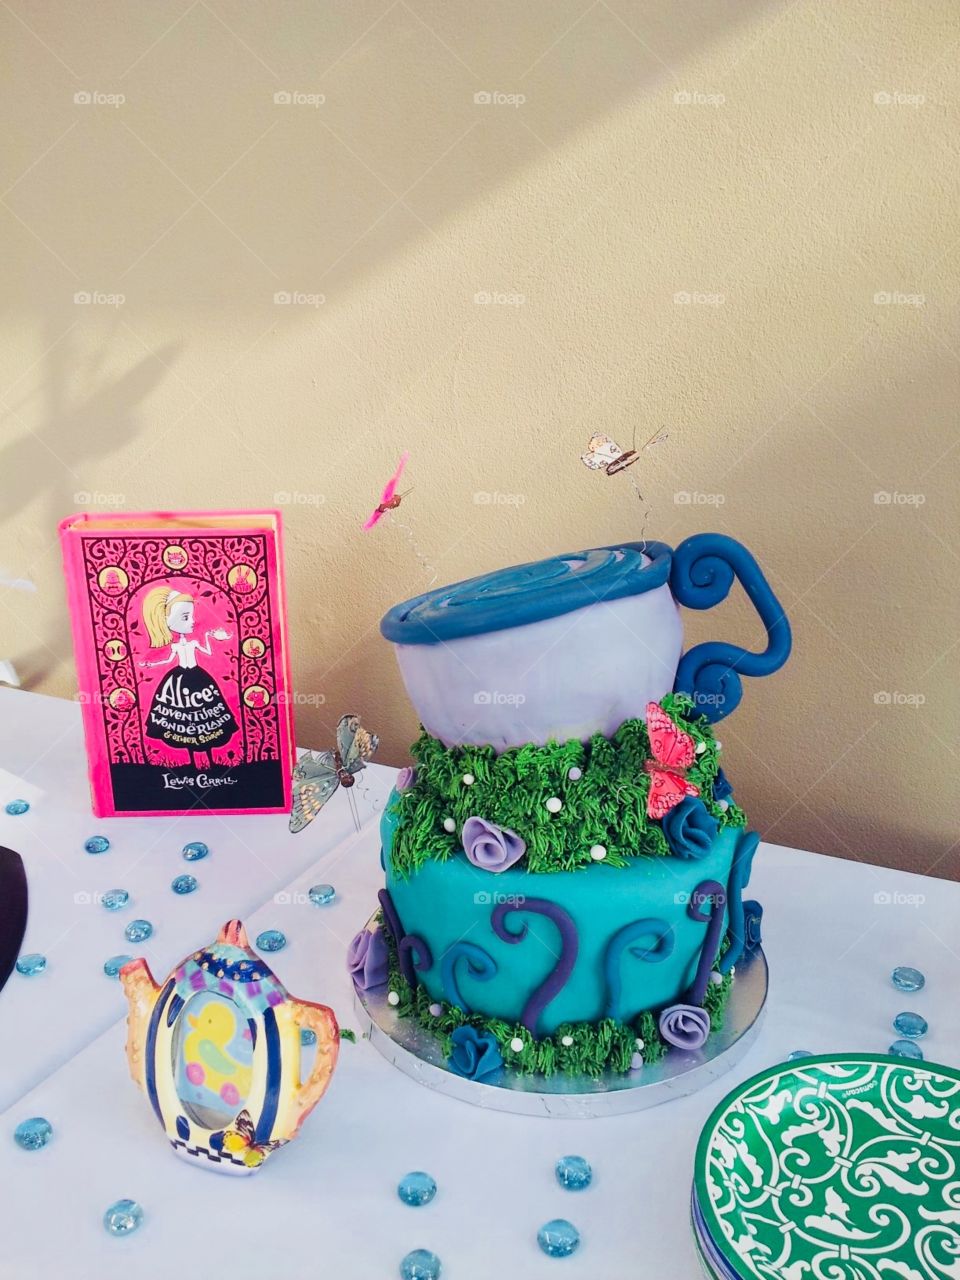 Alice in wonderland baby shower cake 